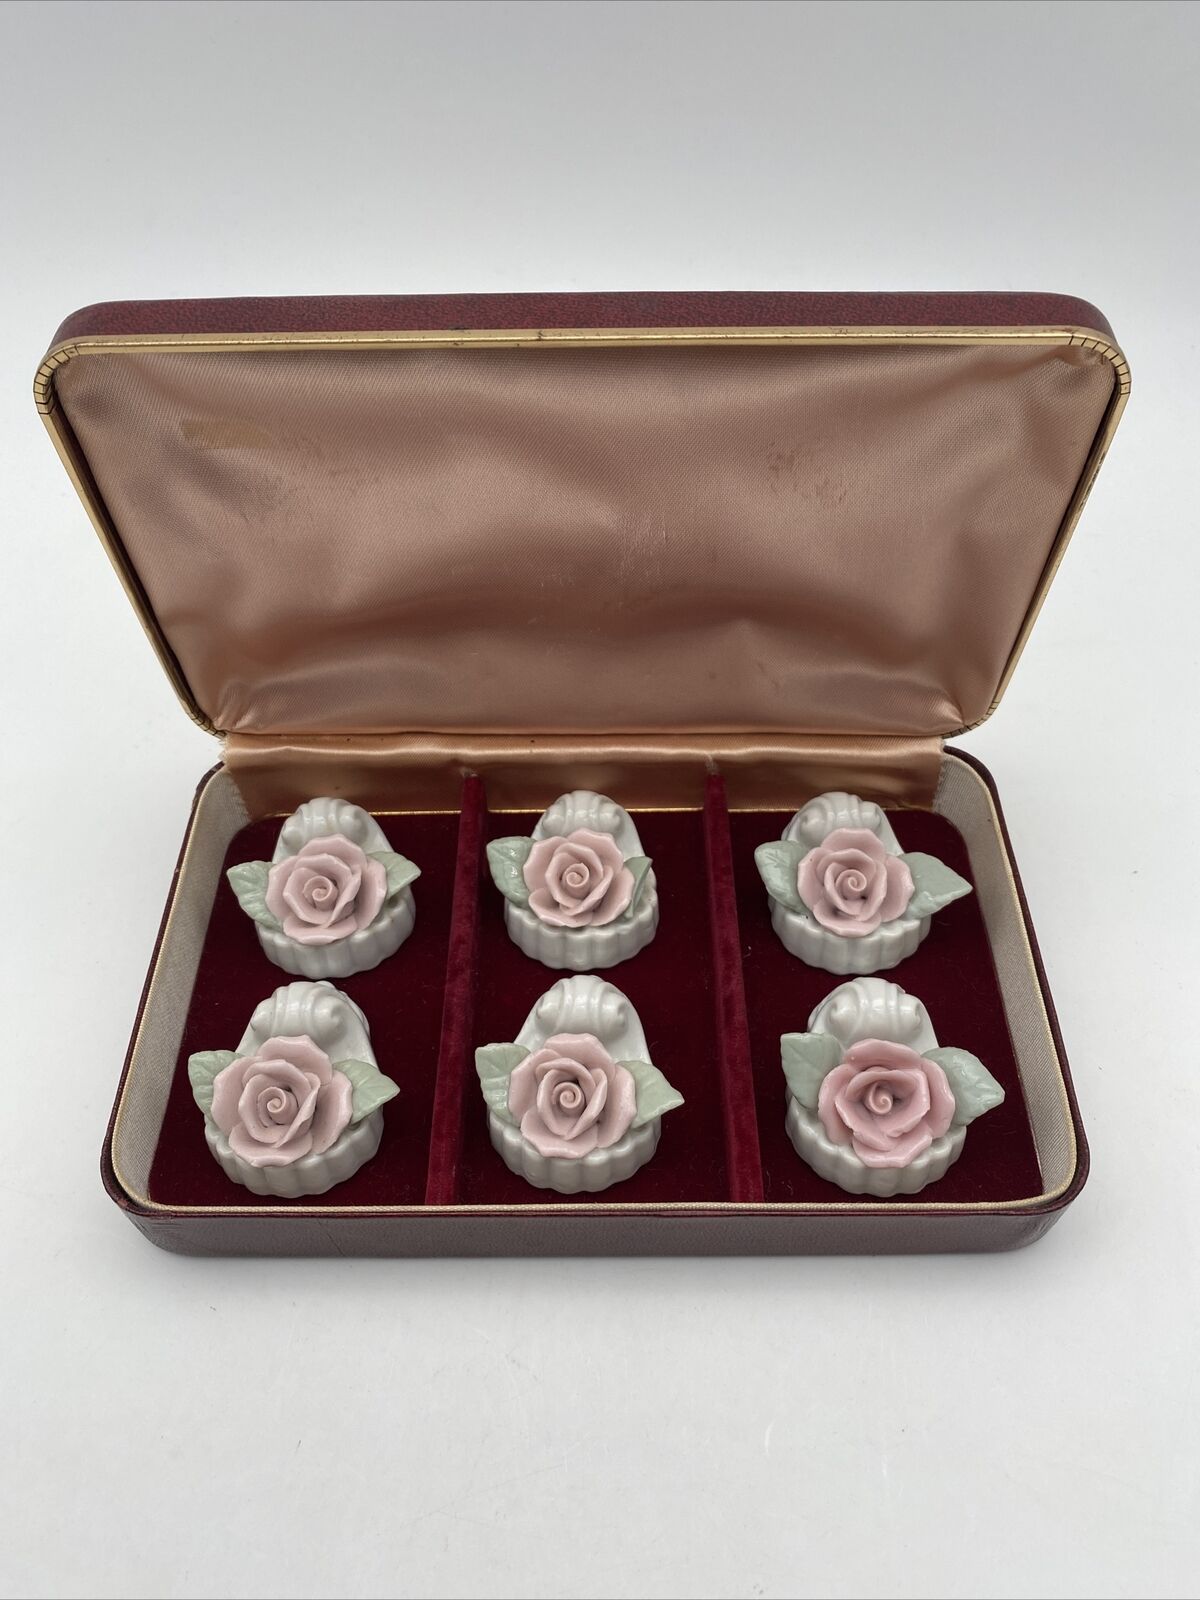 6 Vintage Rose Shaped Place Card Holders Ceramic